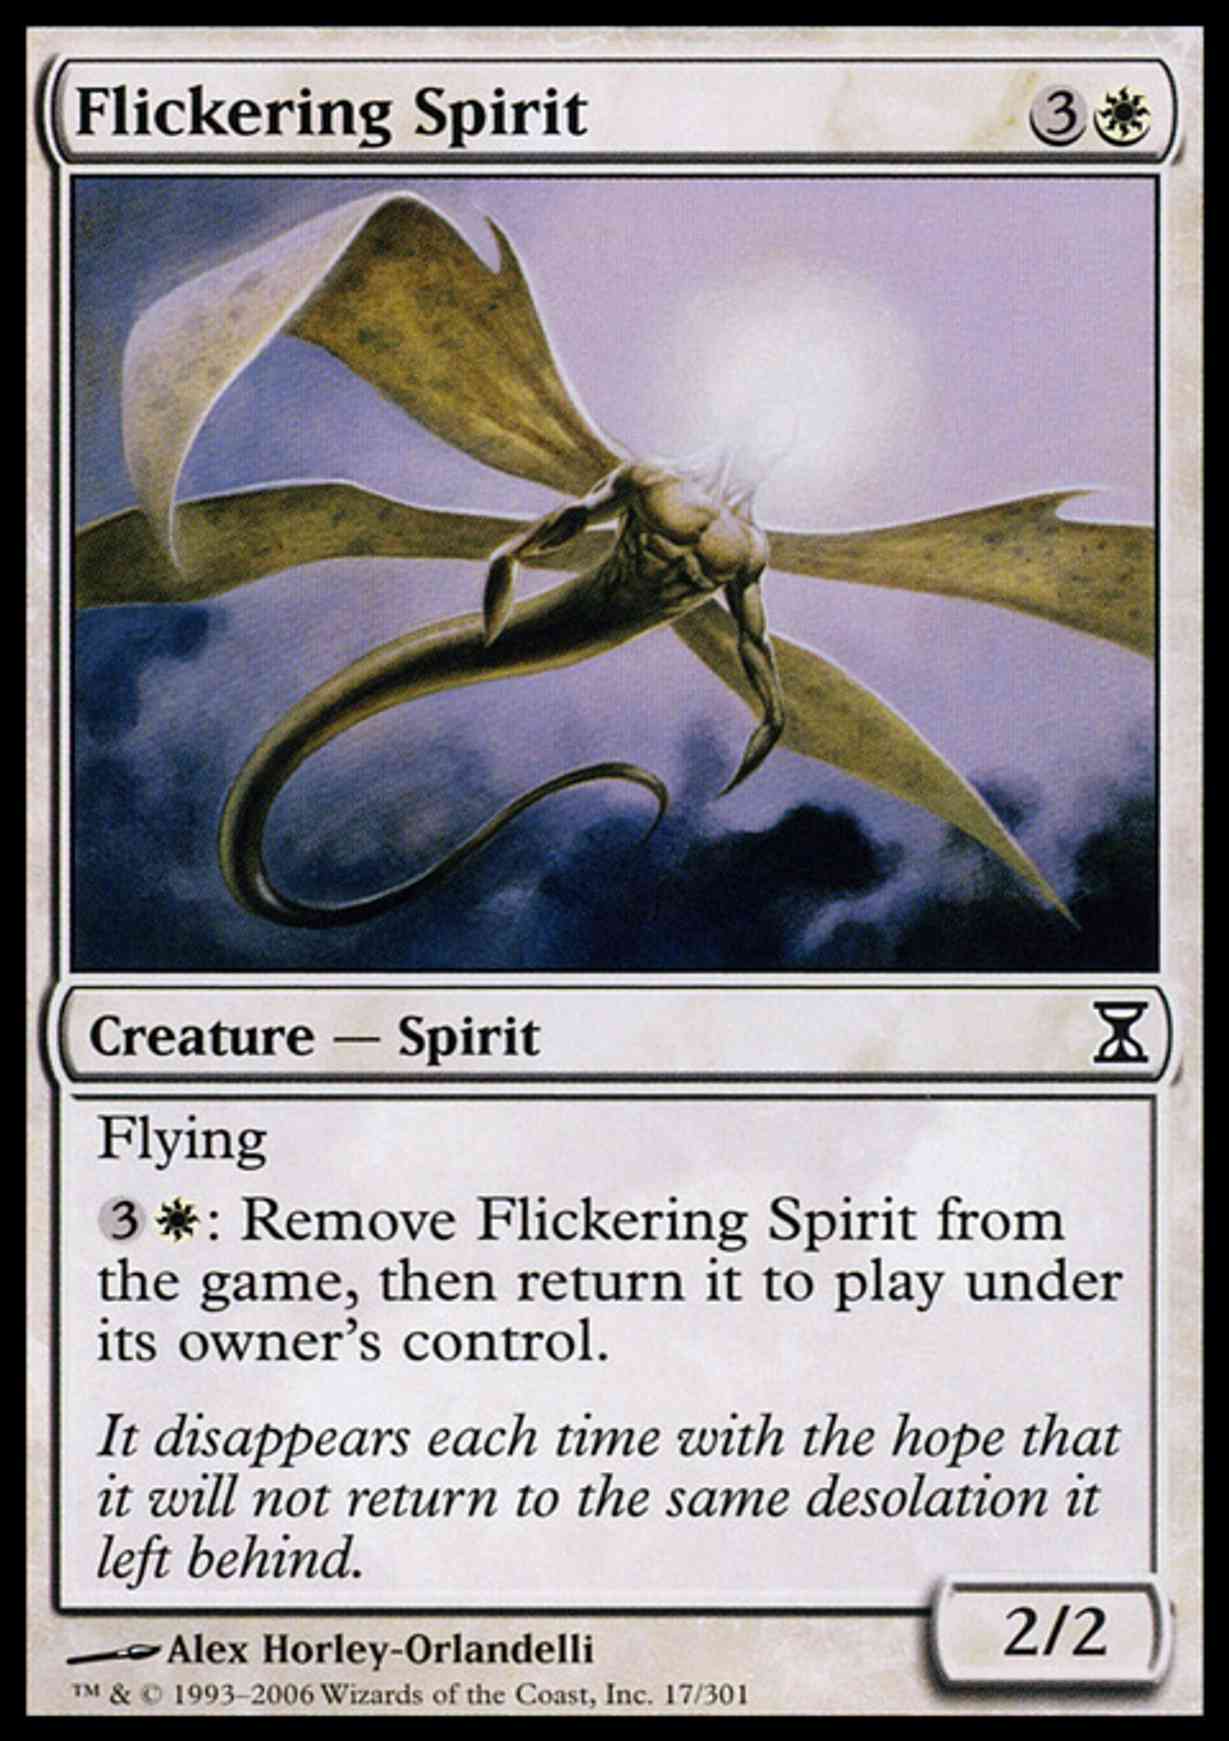 Flickering Spirit magic card front